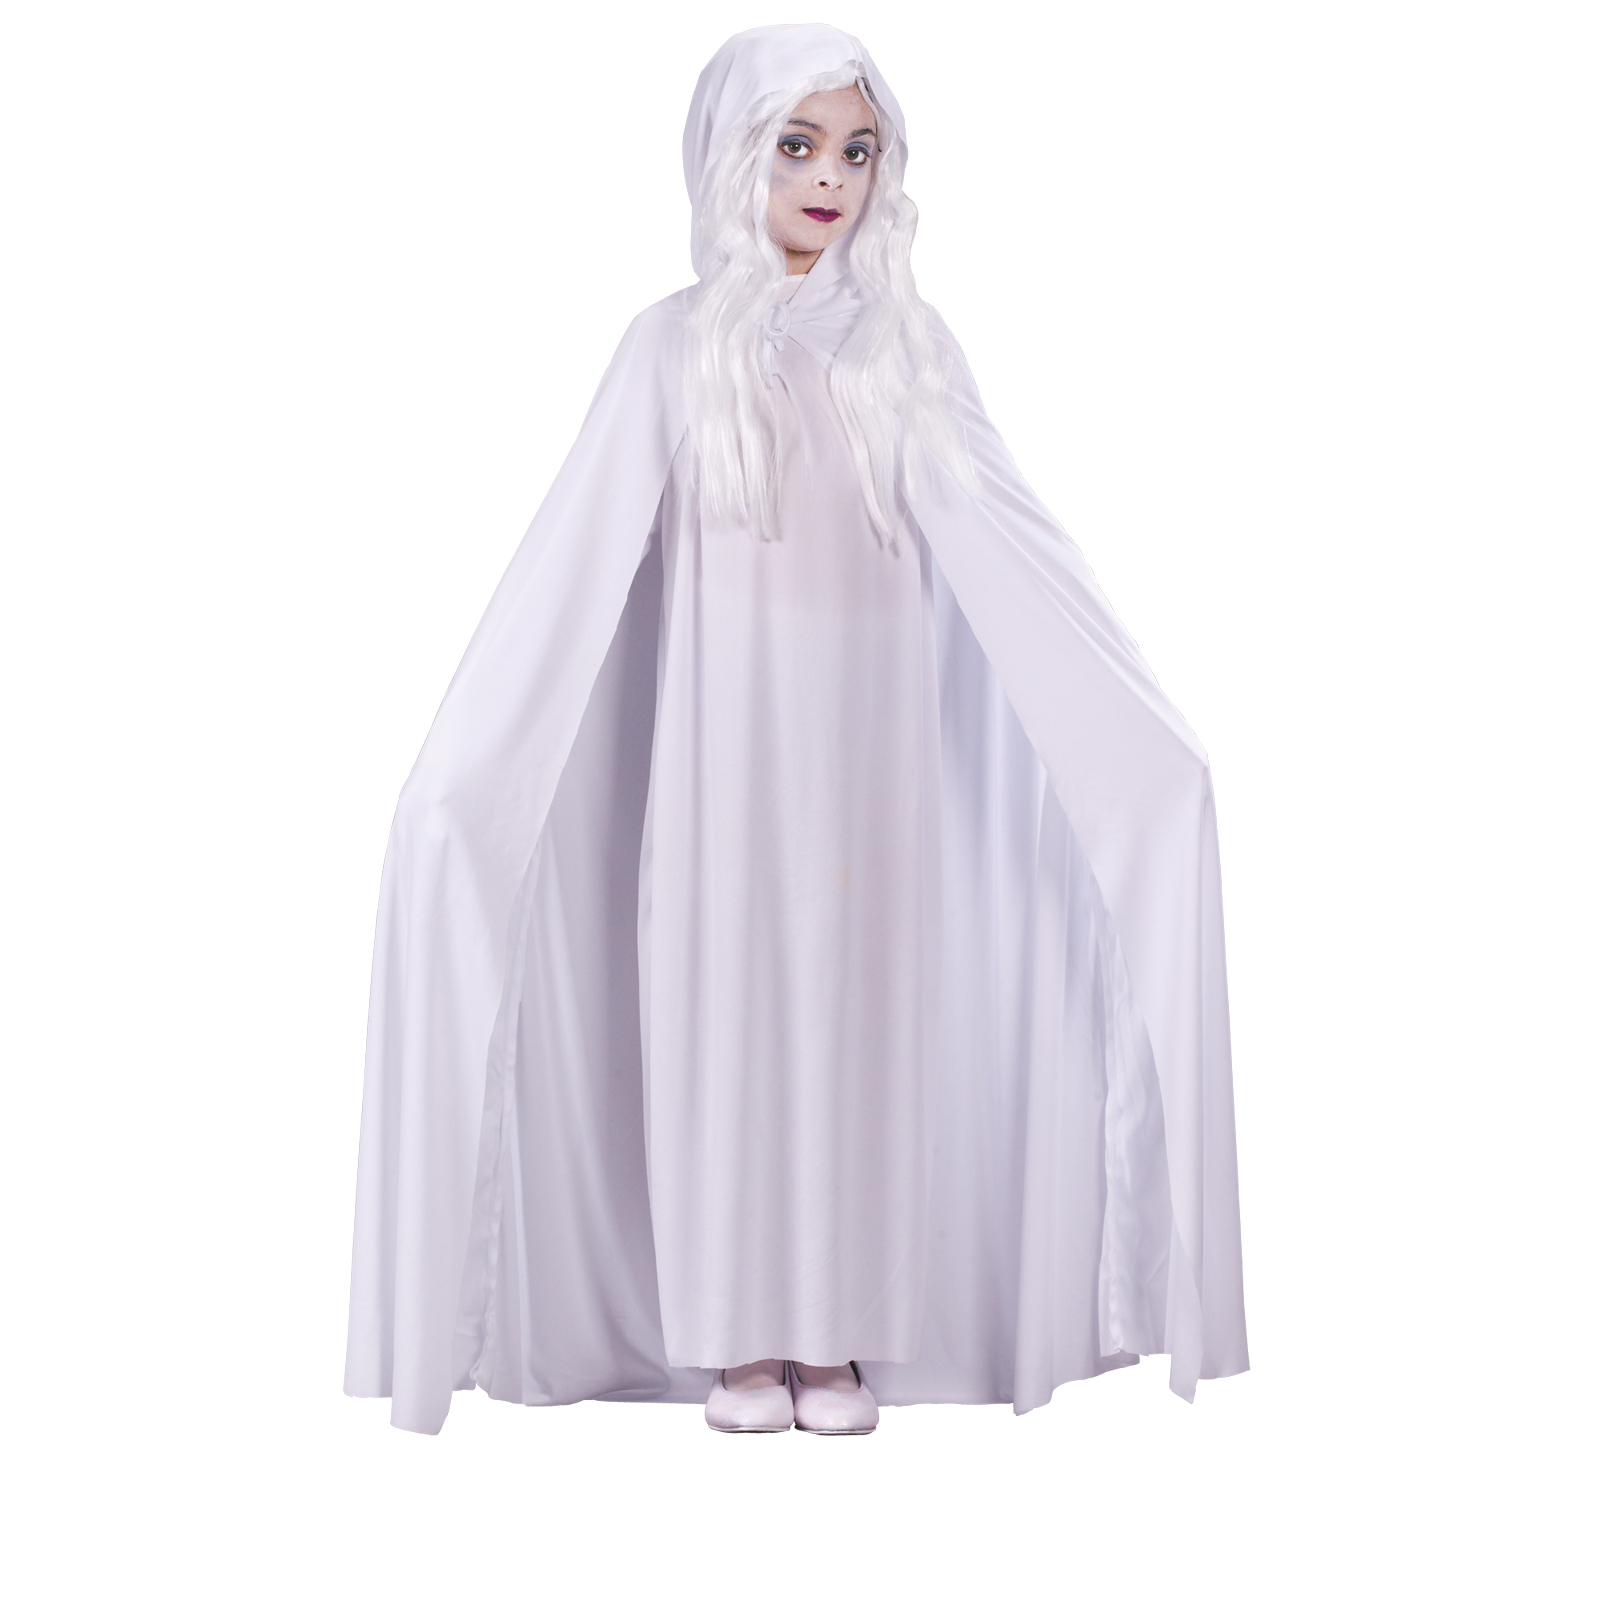 Girls Gossamer Ghost Halloween Costume